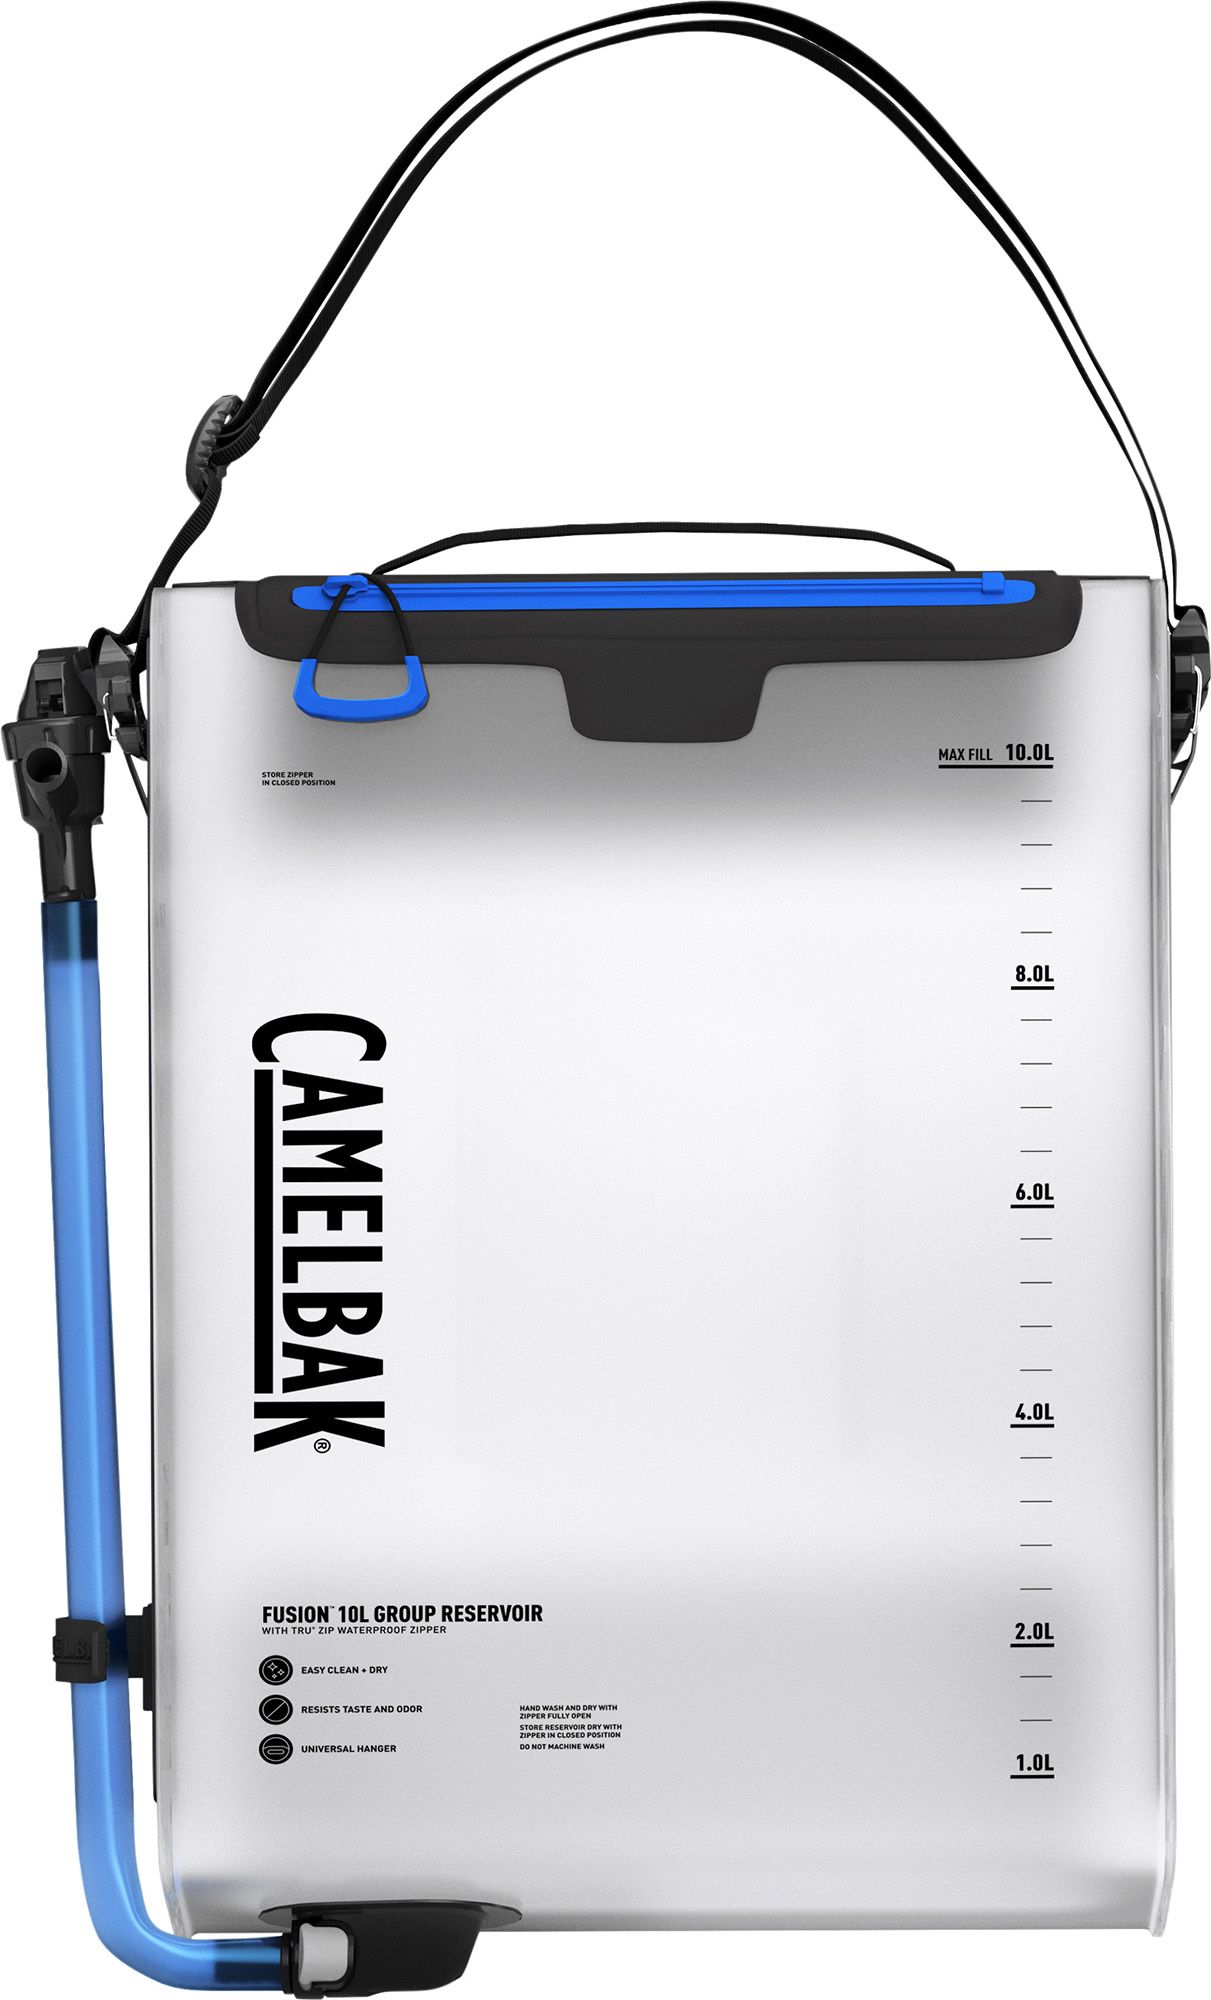 Photos - Backpack CamelBak Fusion 10L Group Reservoir with TRU Zip Waterproof Zipper, Clear 